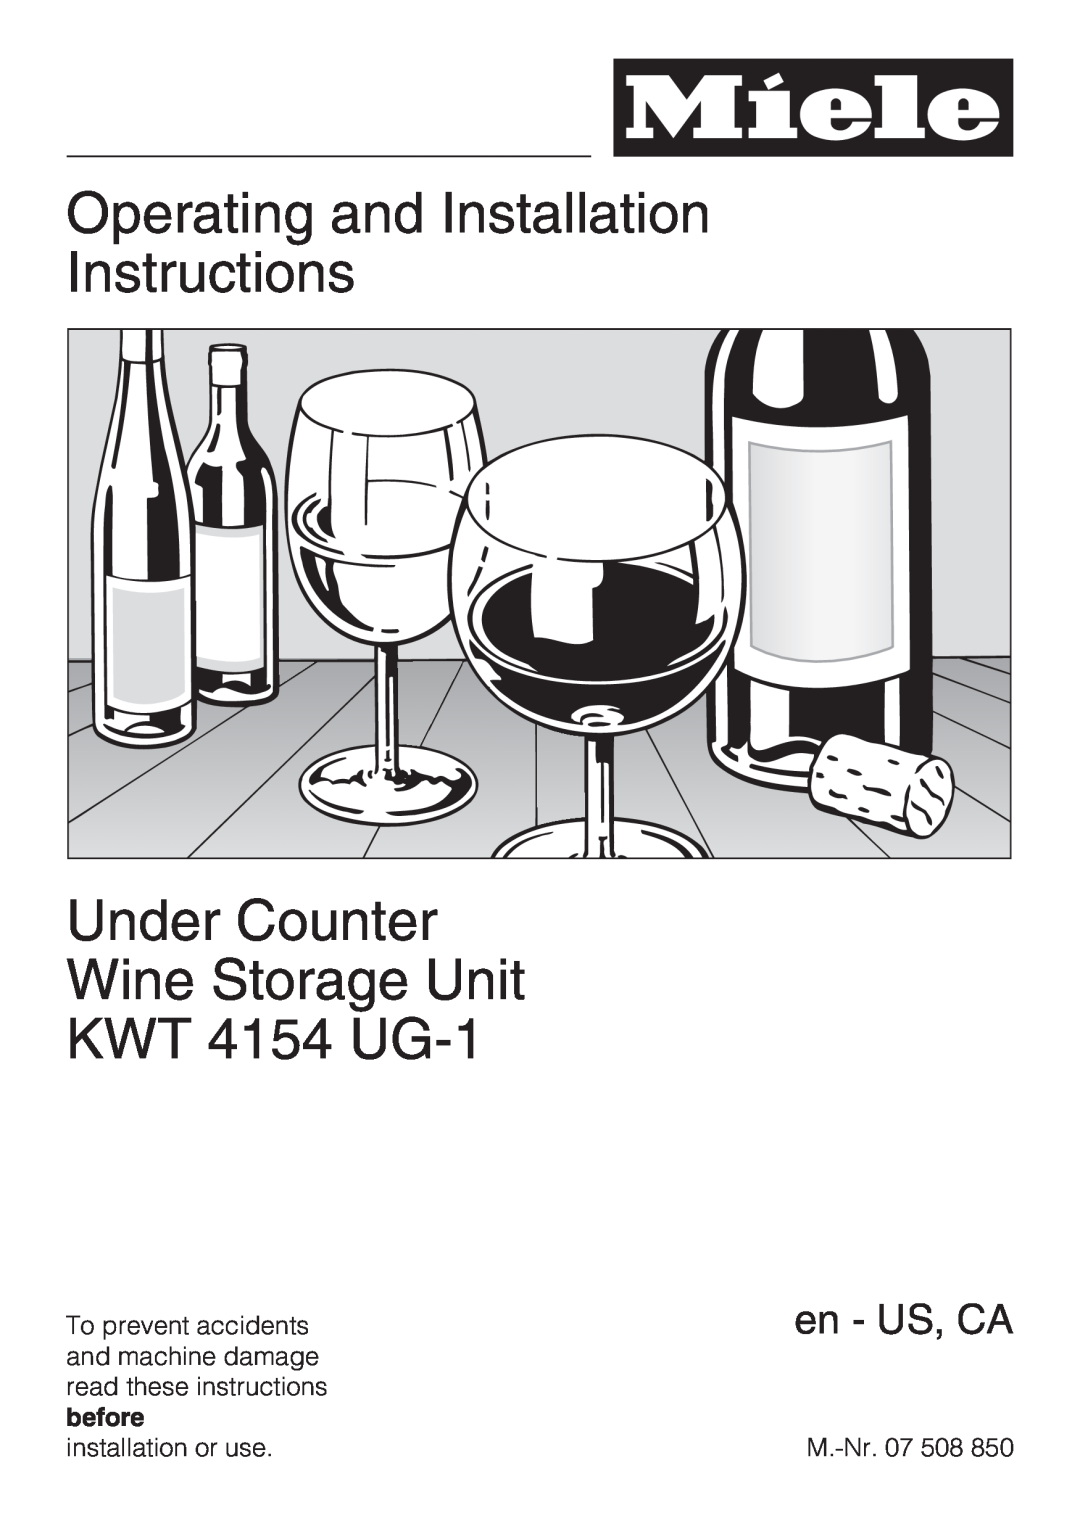 Miele KWT 4154 UG-1 installation instructions Operating and Installation Instructions, en - US, CA 